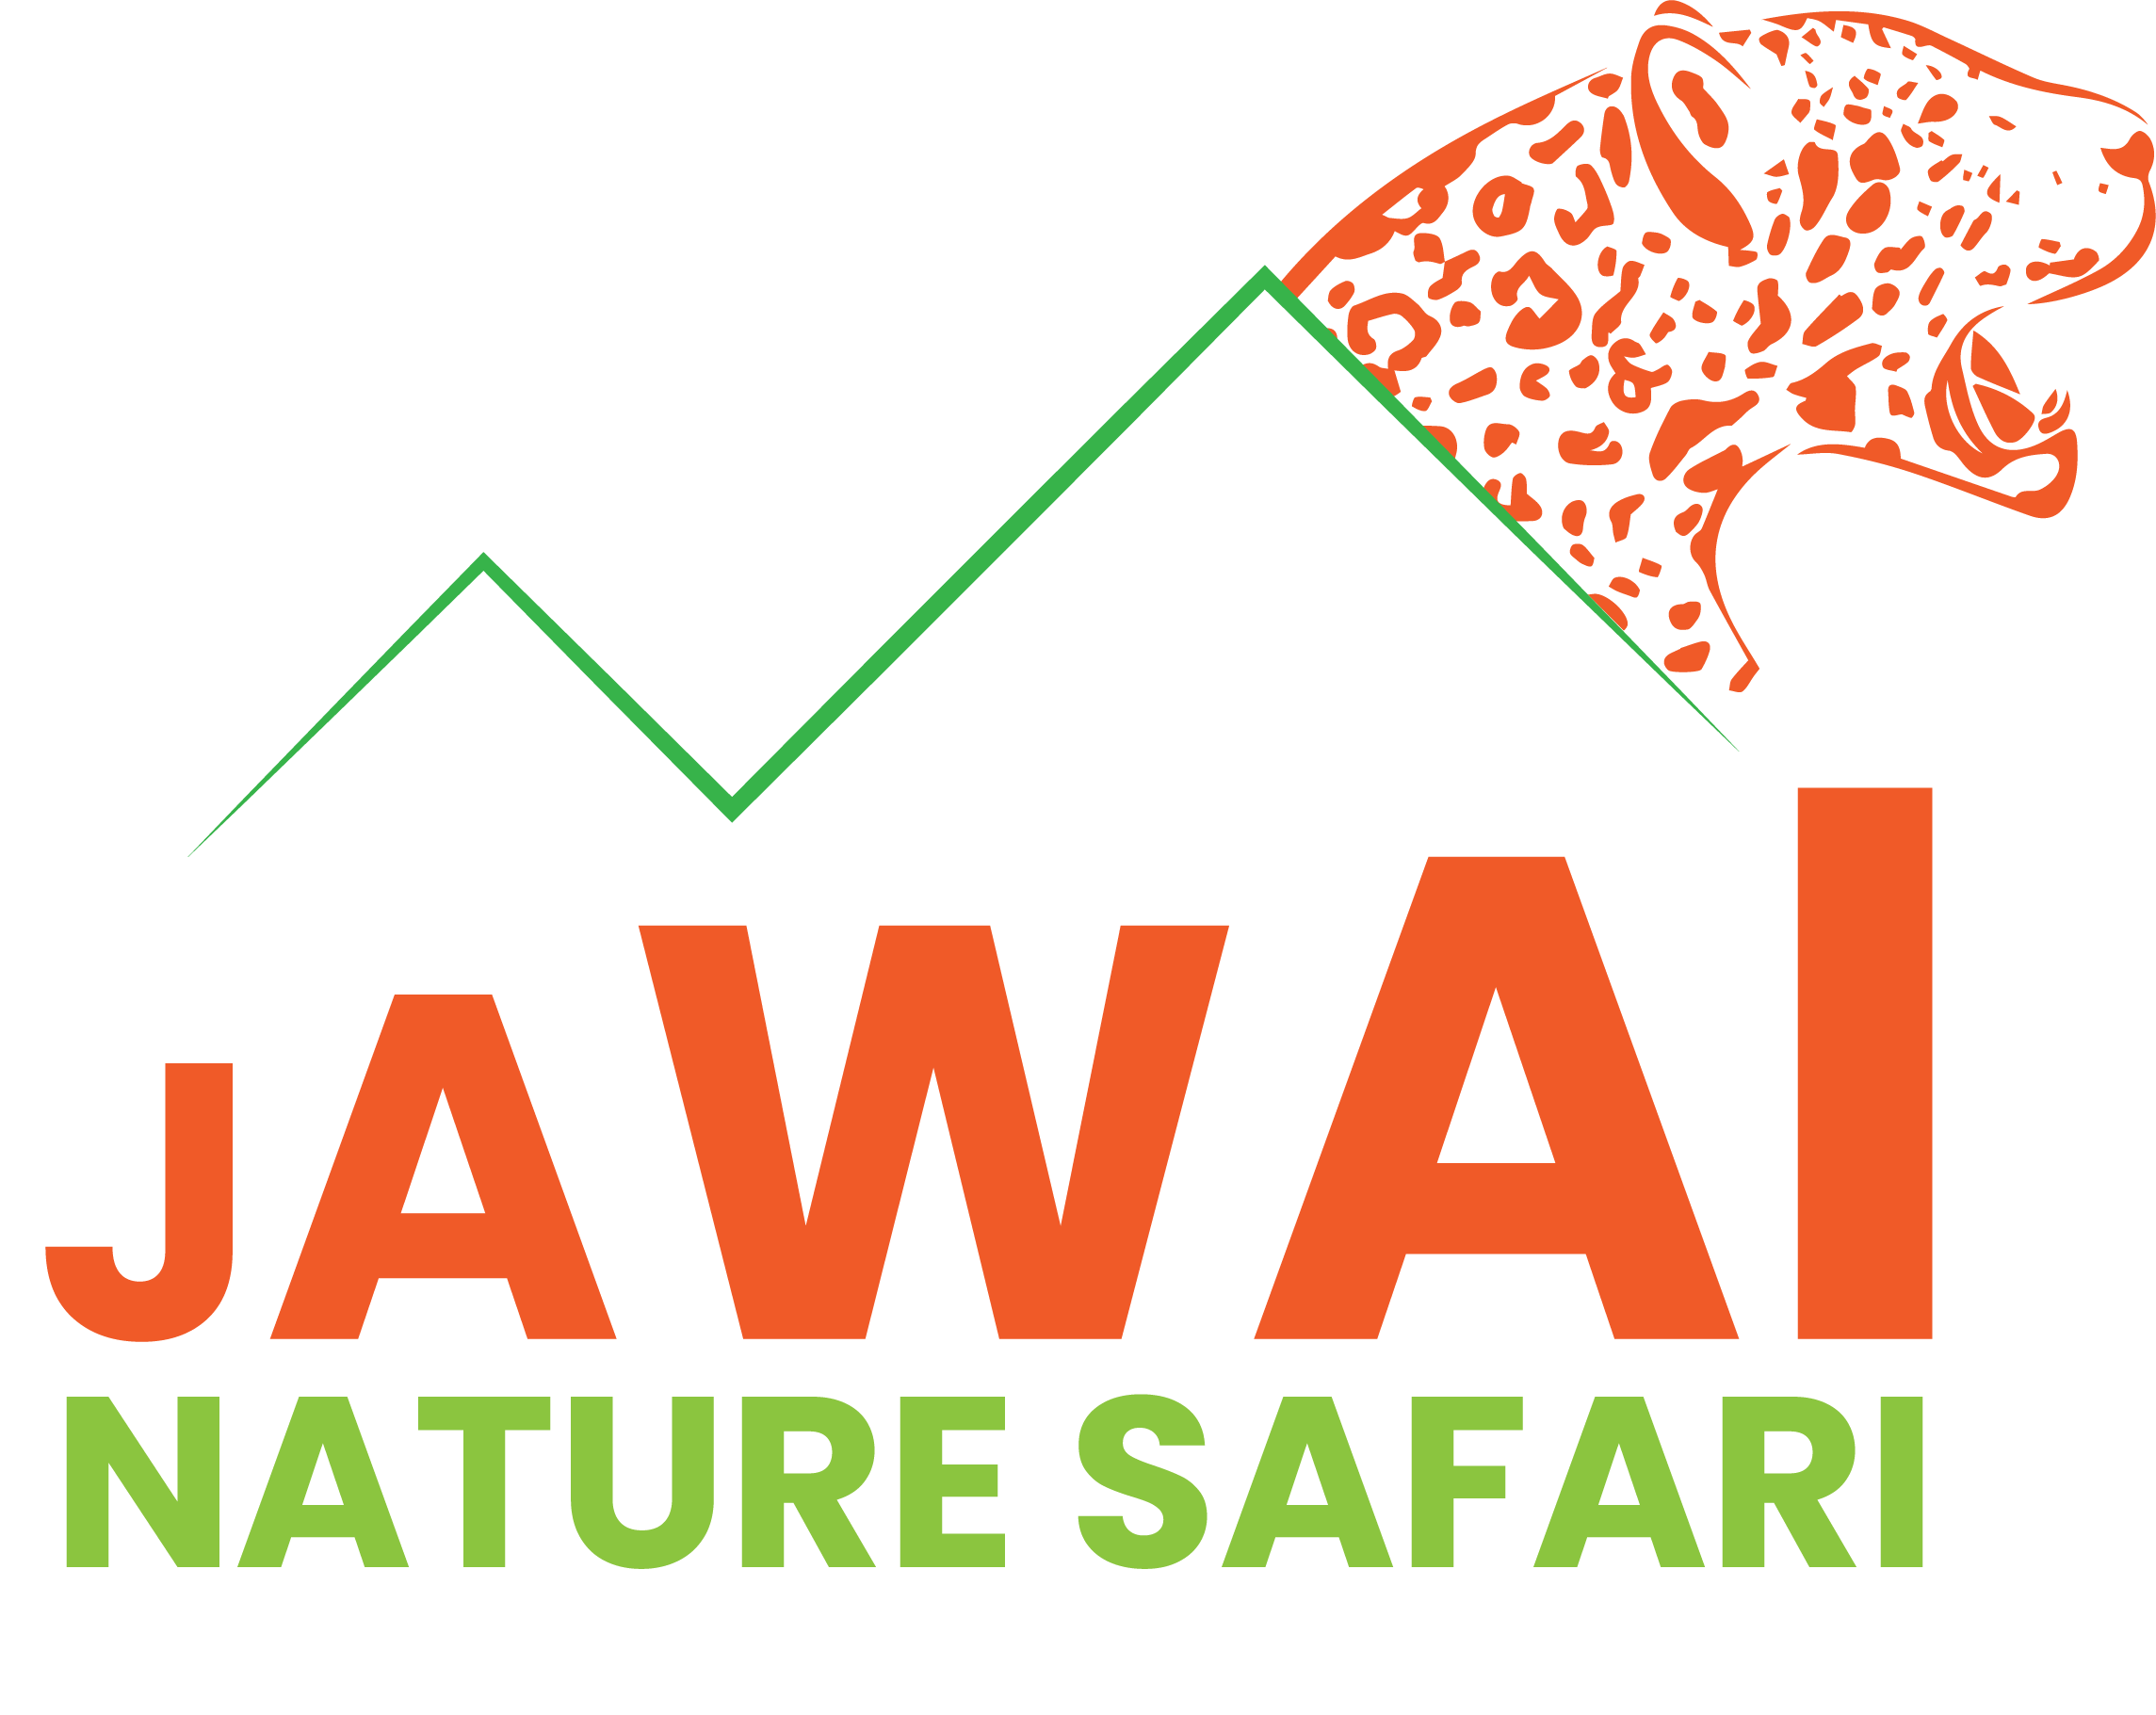 Jawai nature safari